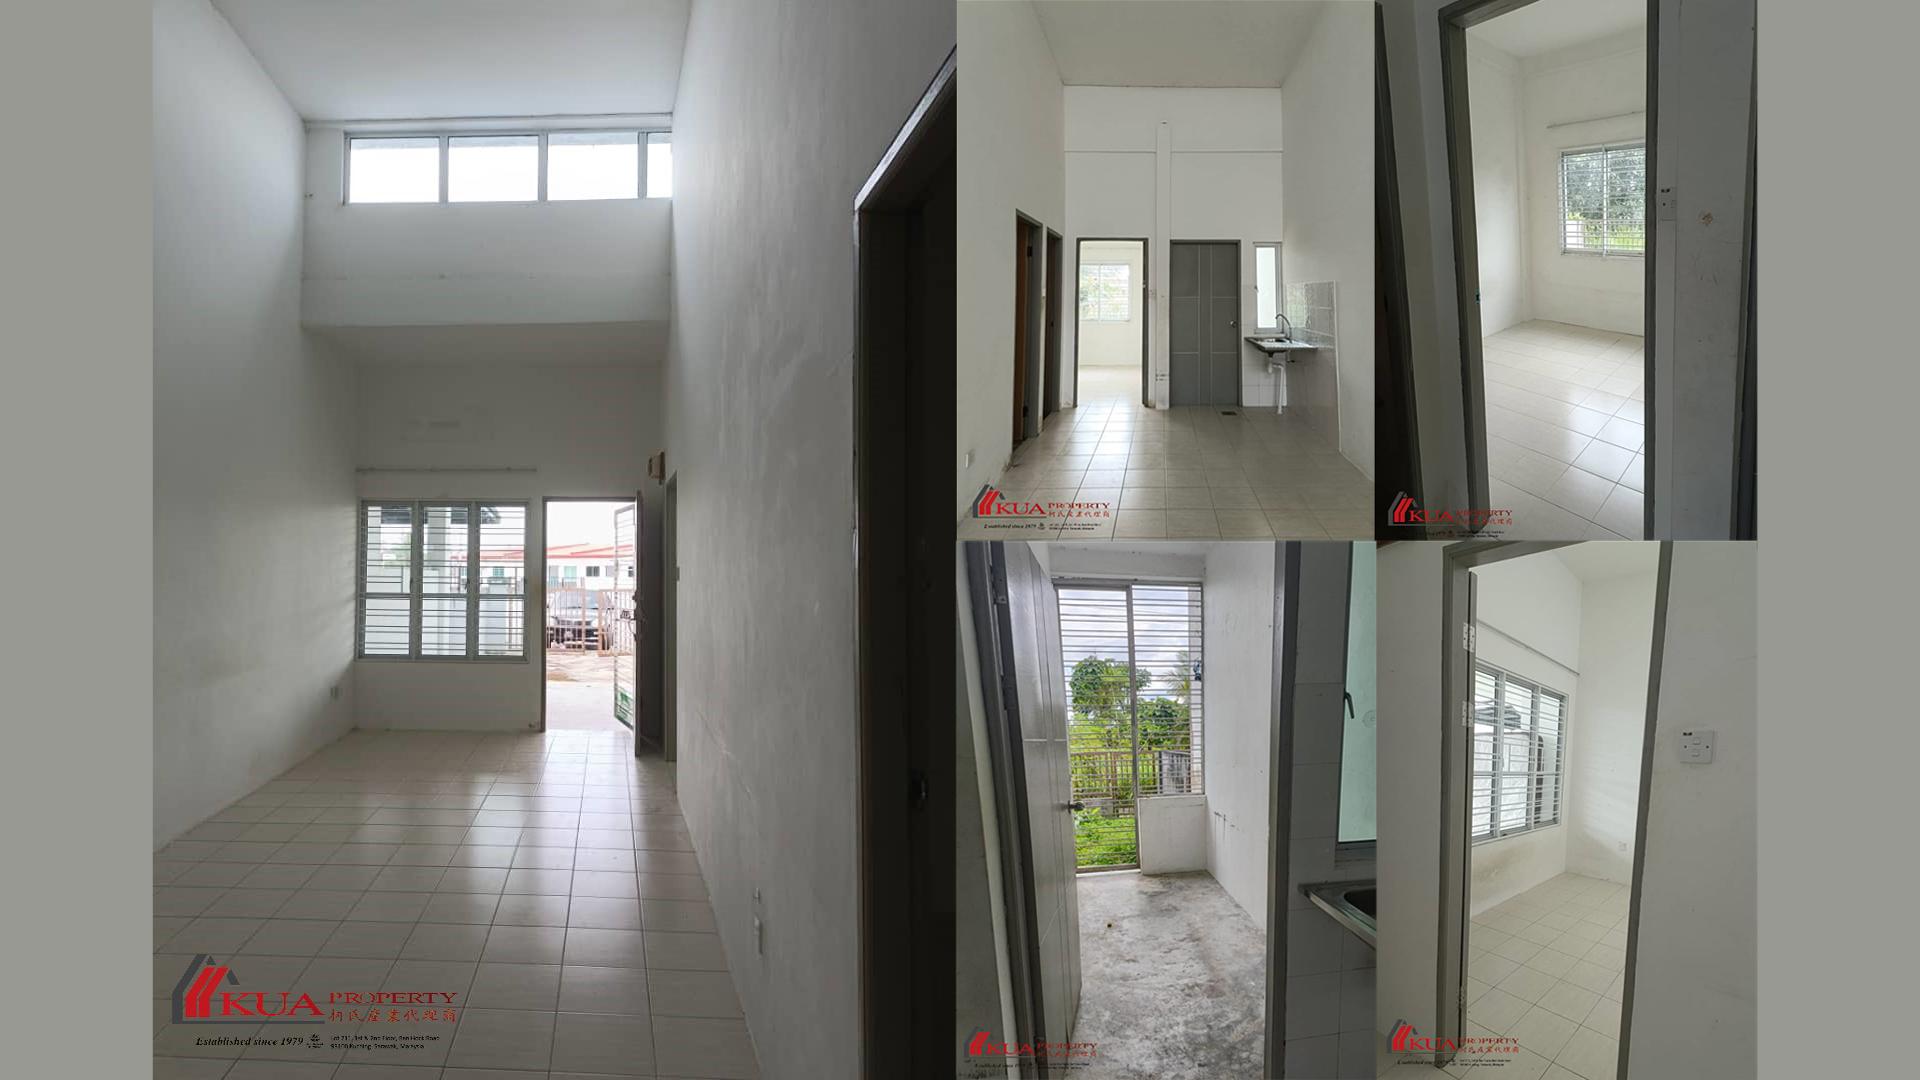 Single Storey Terrace Intermediate House FOR SALE! Located at Taman Meranti, Kota Samarahan